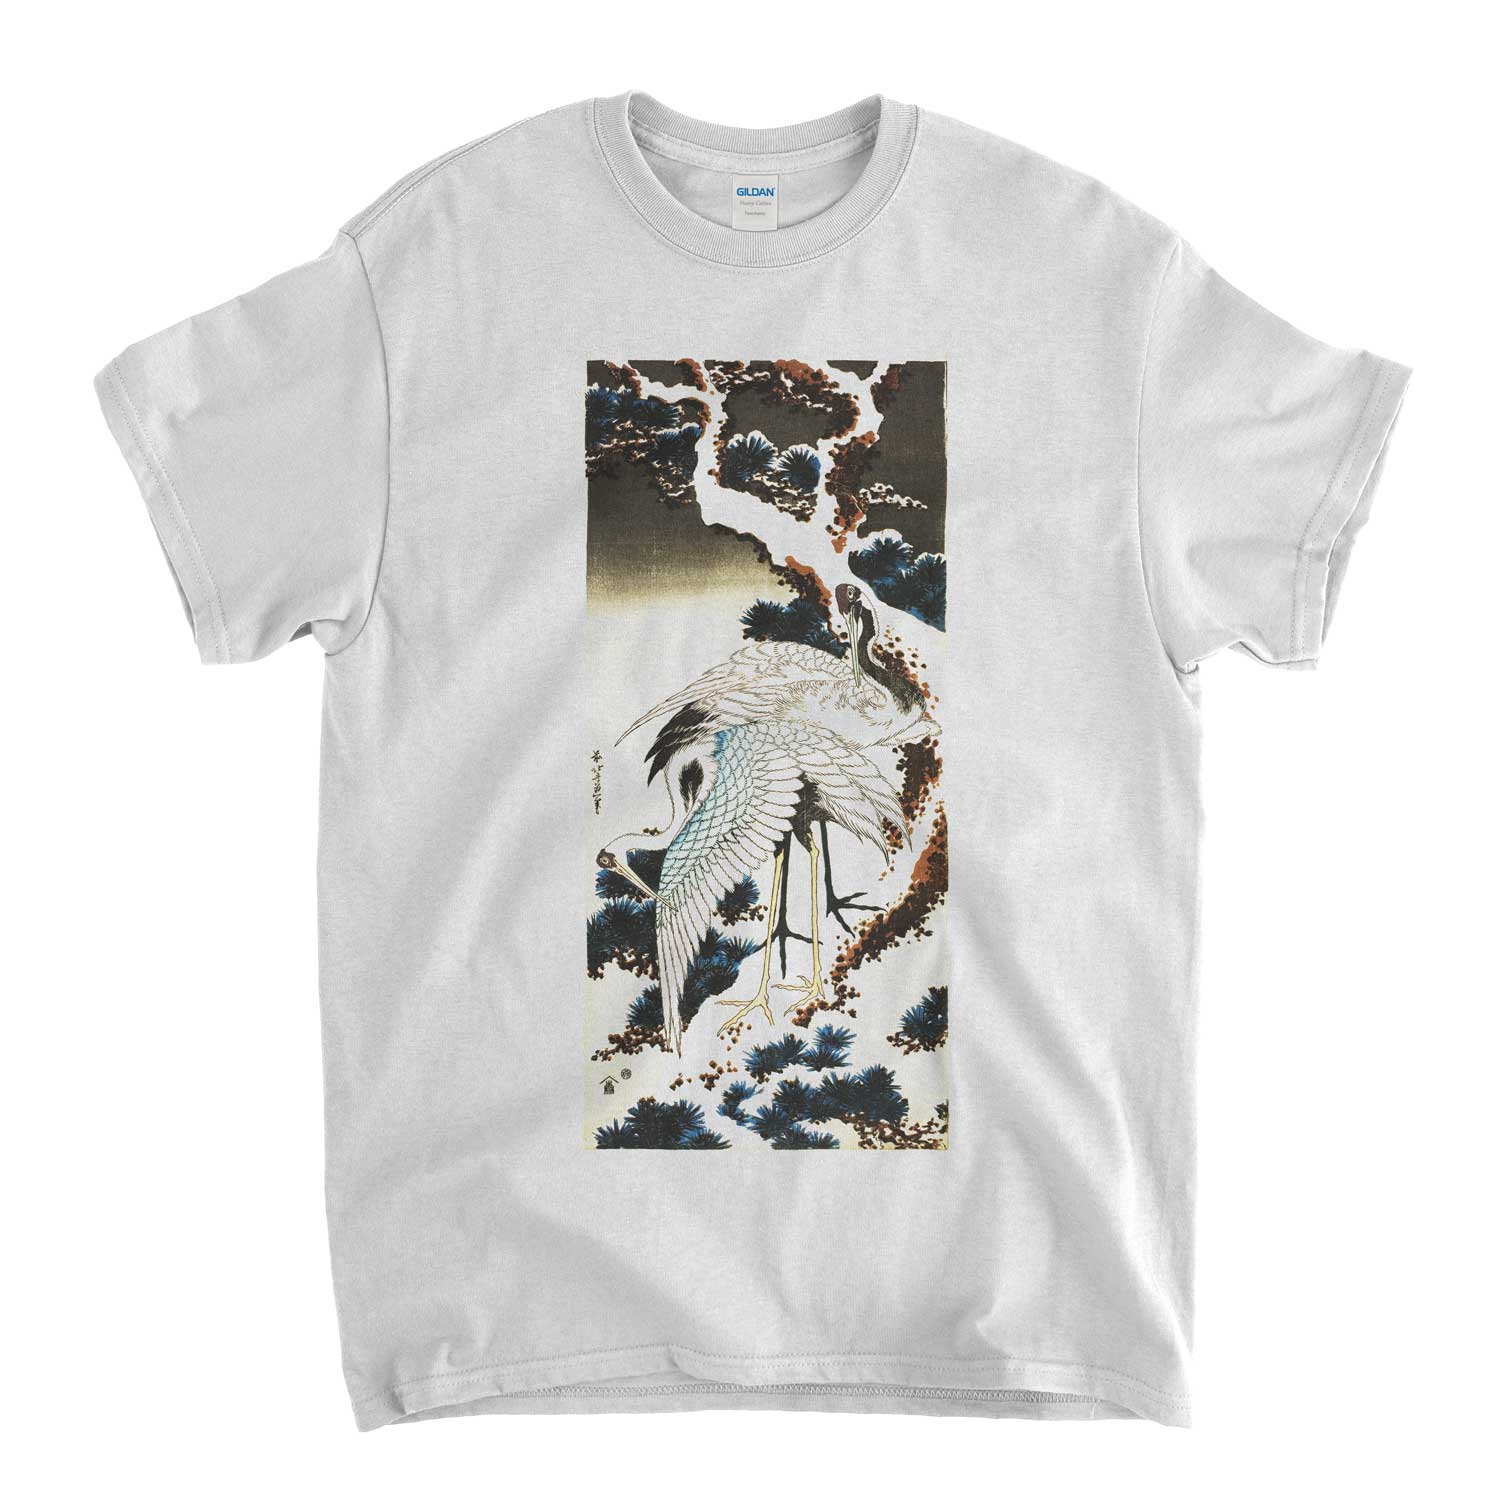 Hokusai T Shirt - Cranes On Snow Covered Pine Classic Japanese Art